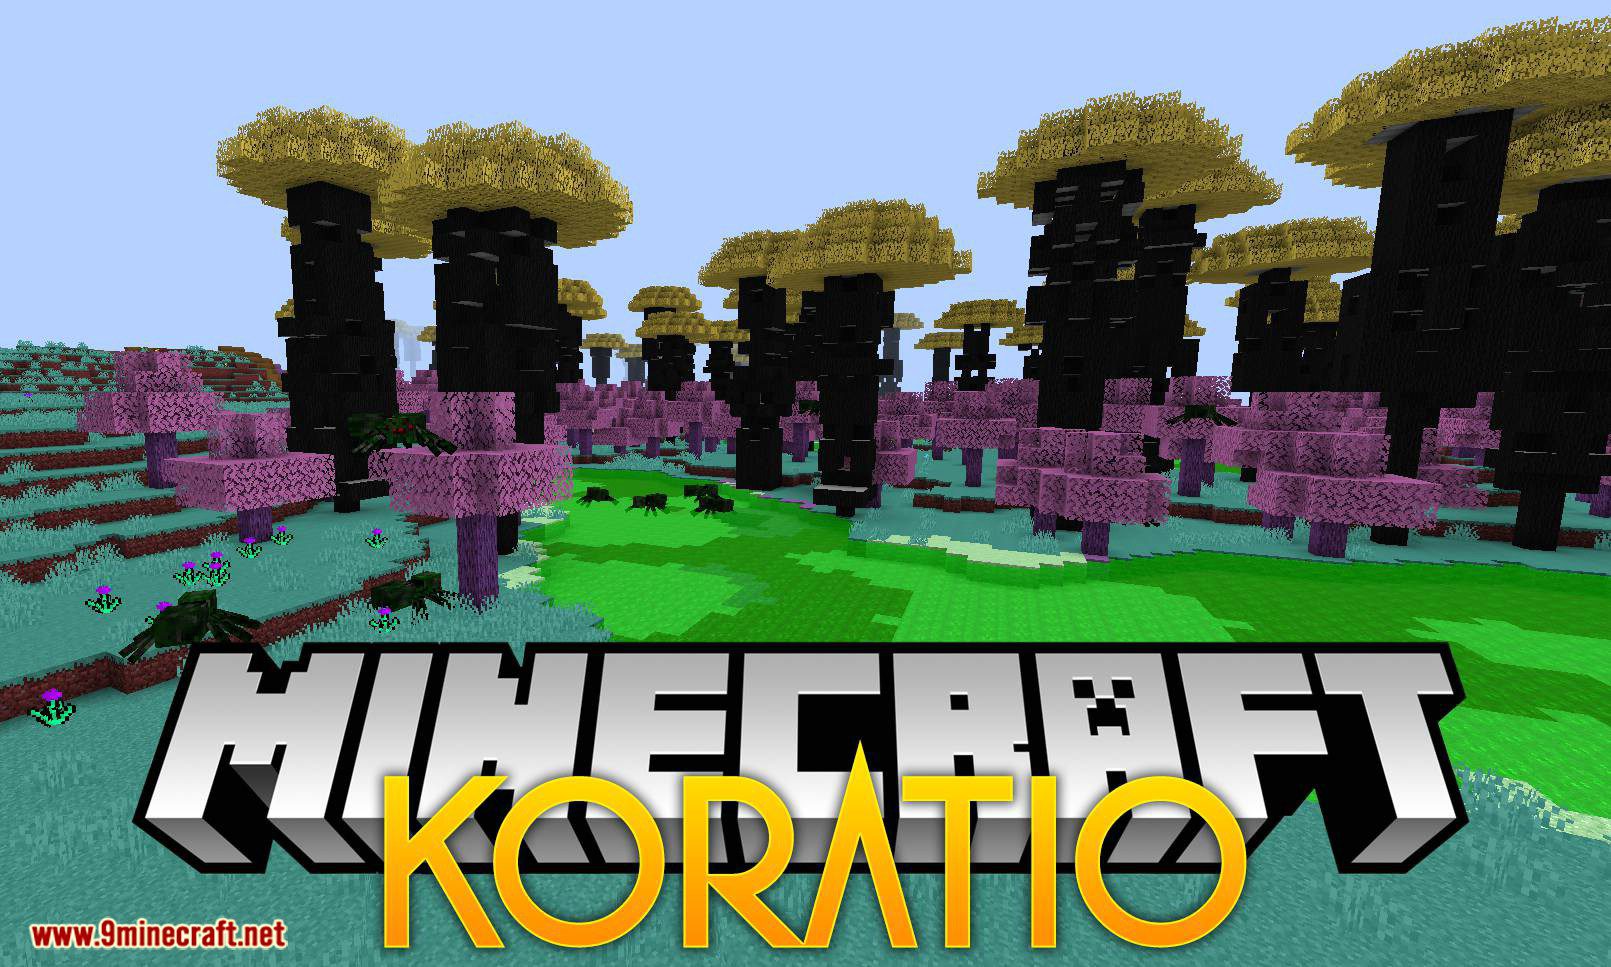 Koratio mod for minecraft logo